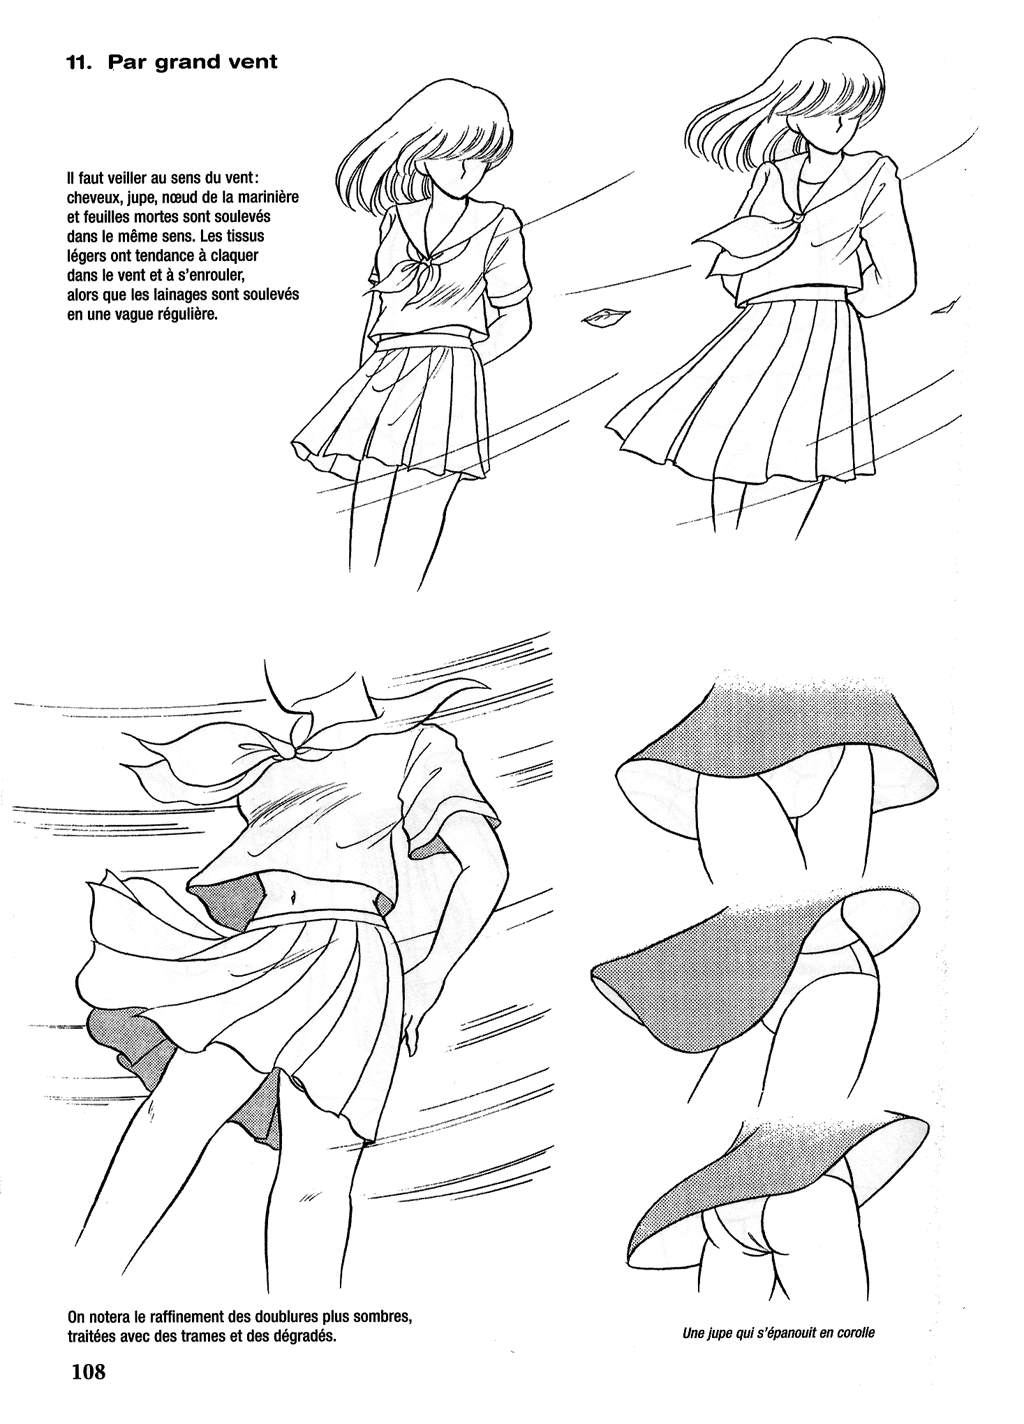 Le dessin du Manga 04 - Personnages feminin, Attitudes, Expressions numero d'image 108